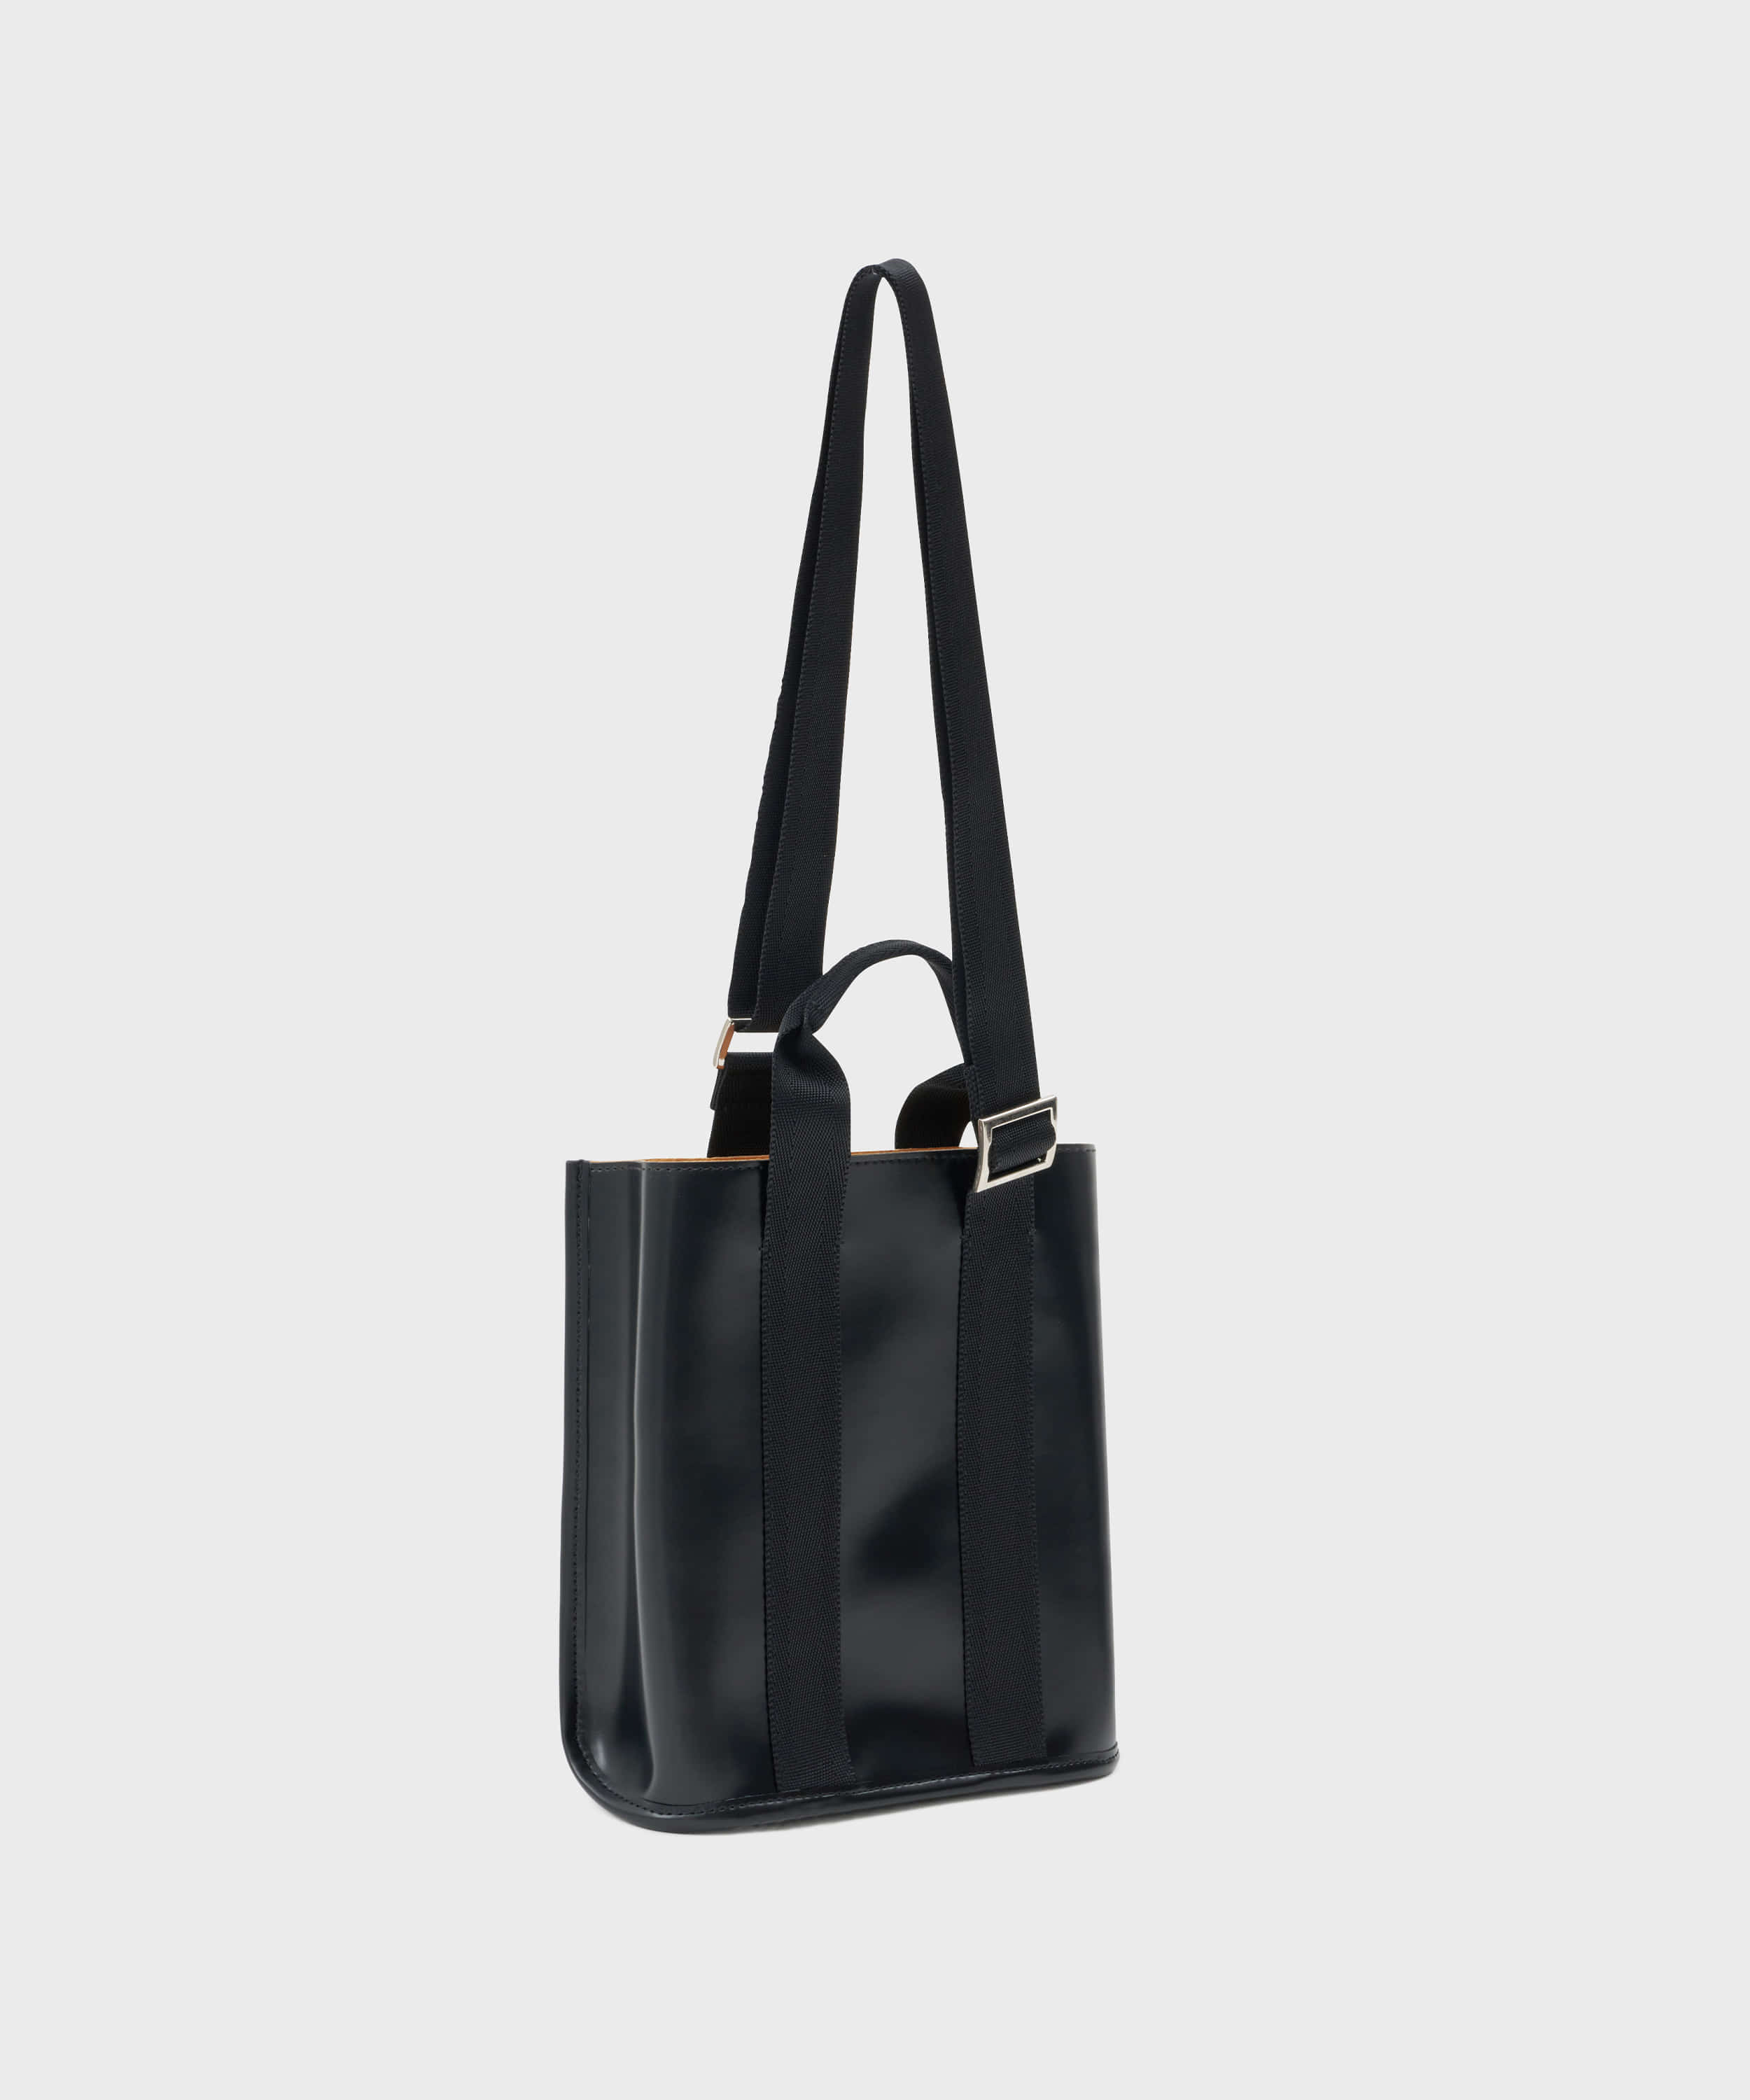 MY__ x PIENI Double Bag S (Black)